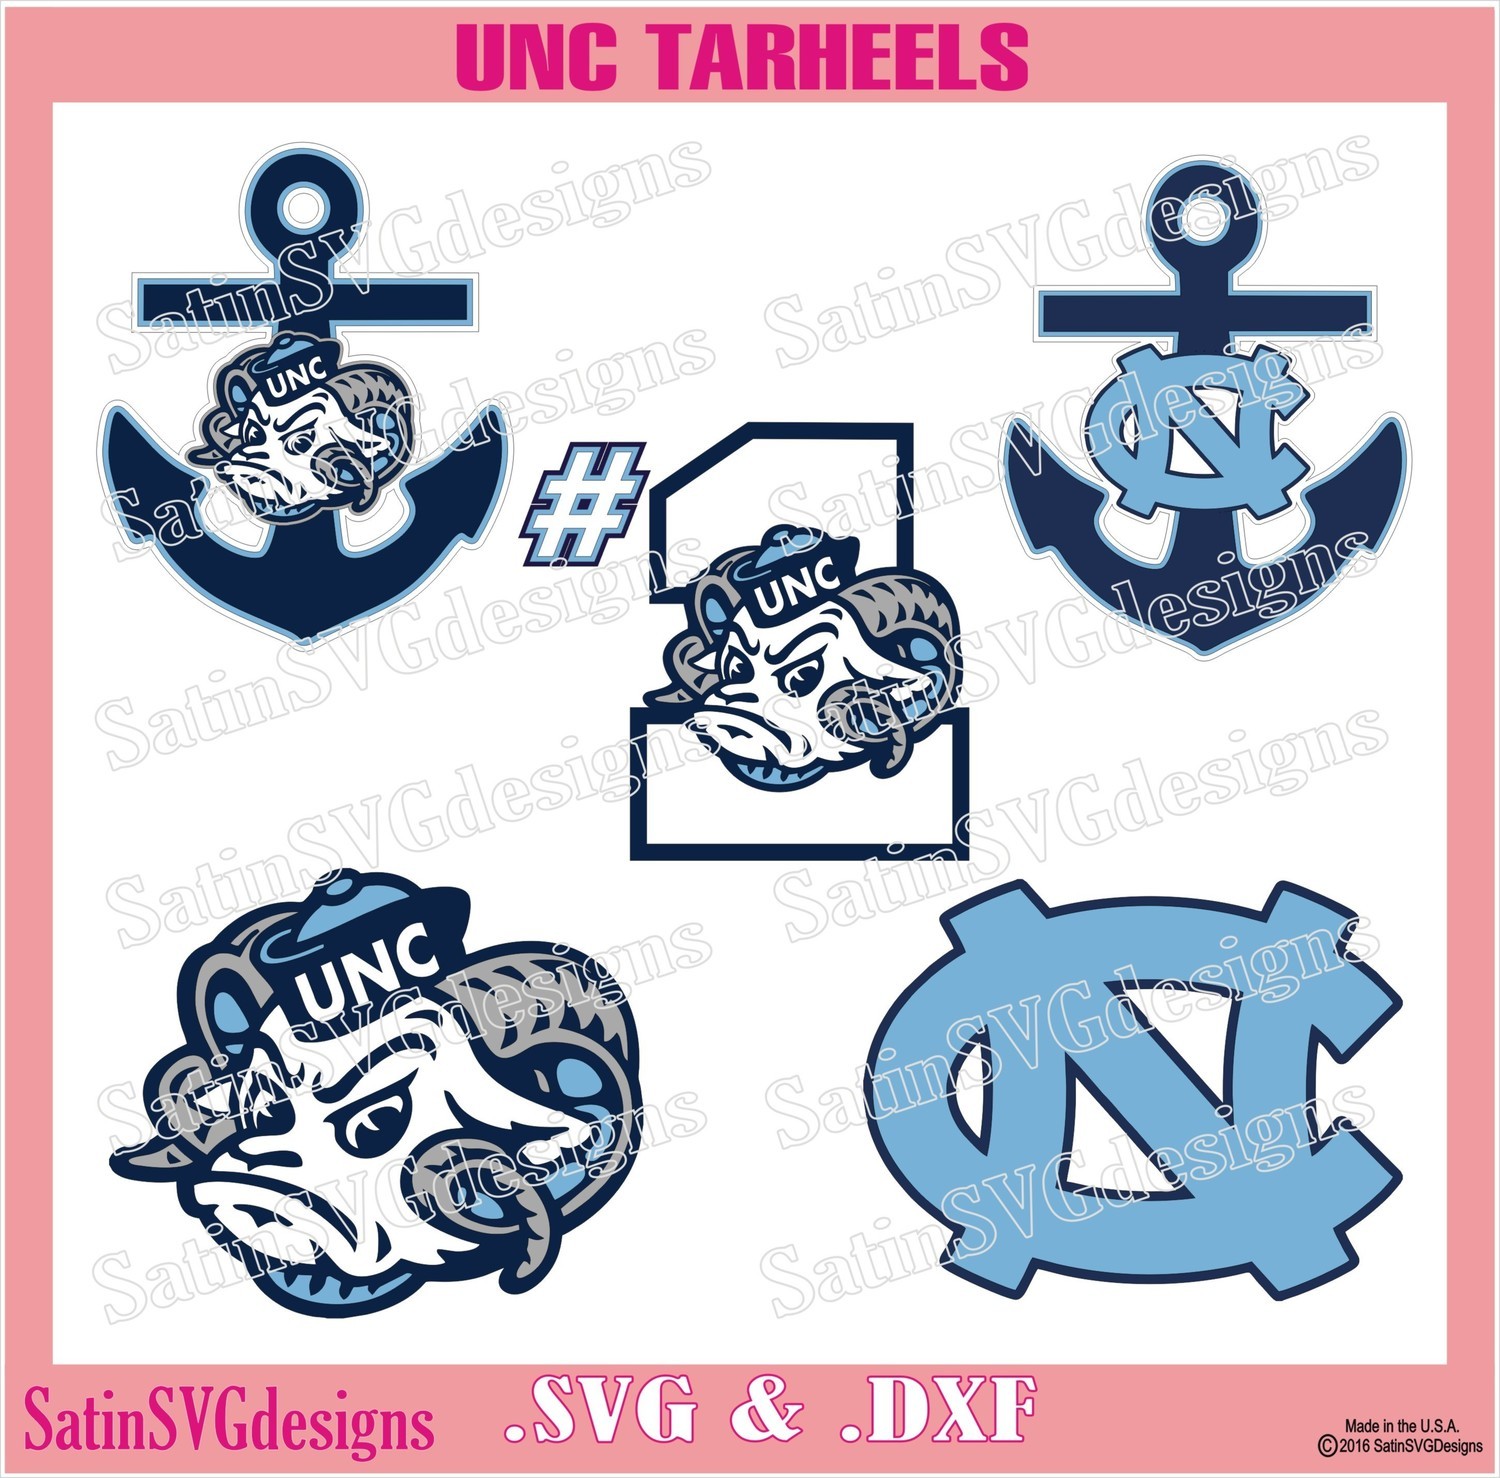 UNC North Carolina Tarheels Set College Design SVG Files, Cricut, Silhouette Studio, Digital Cut Files